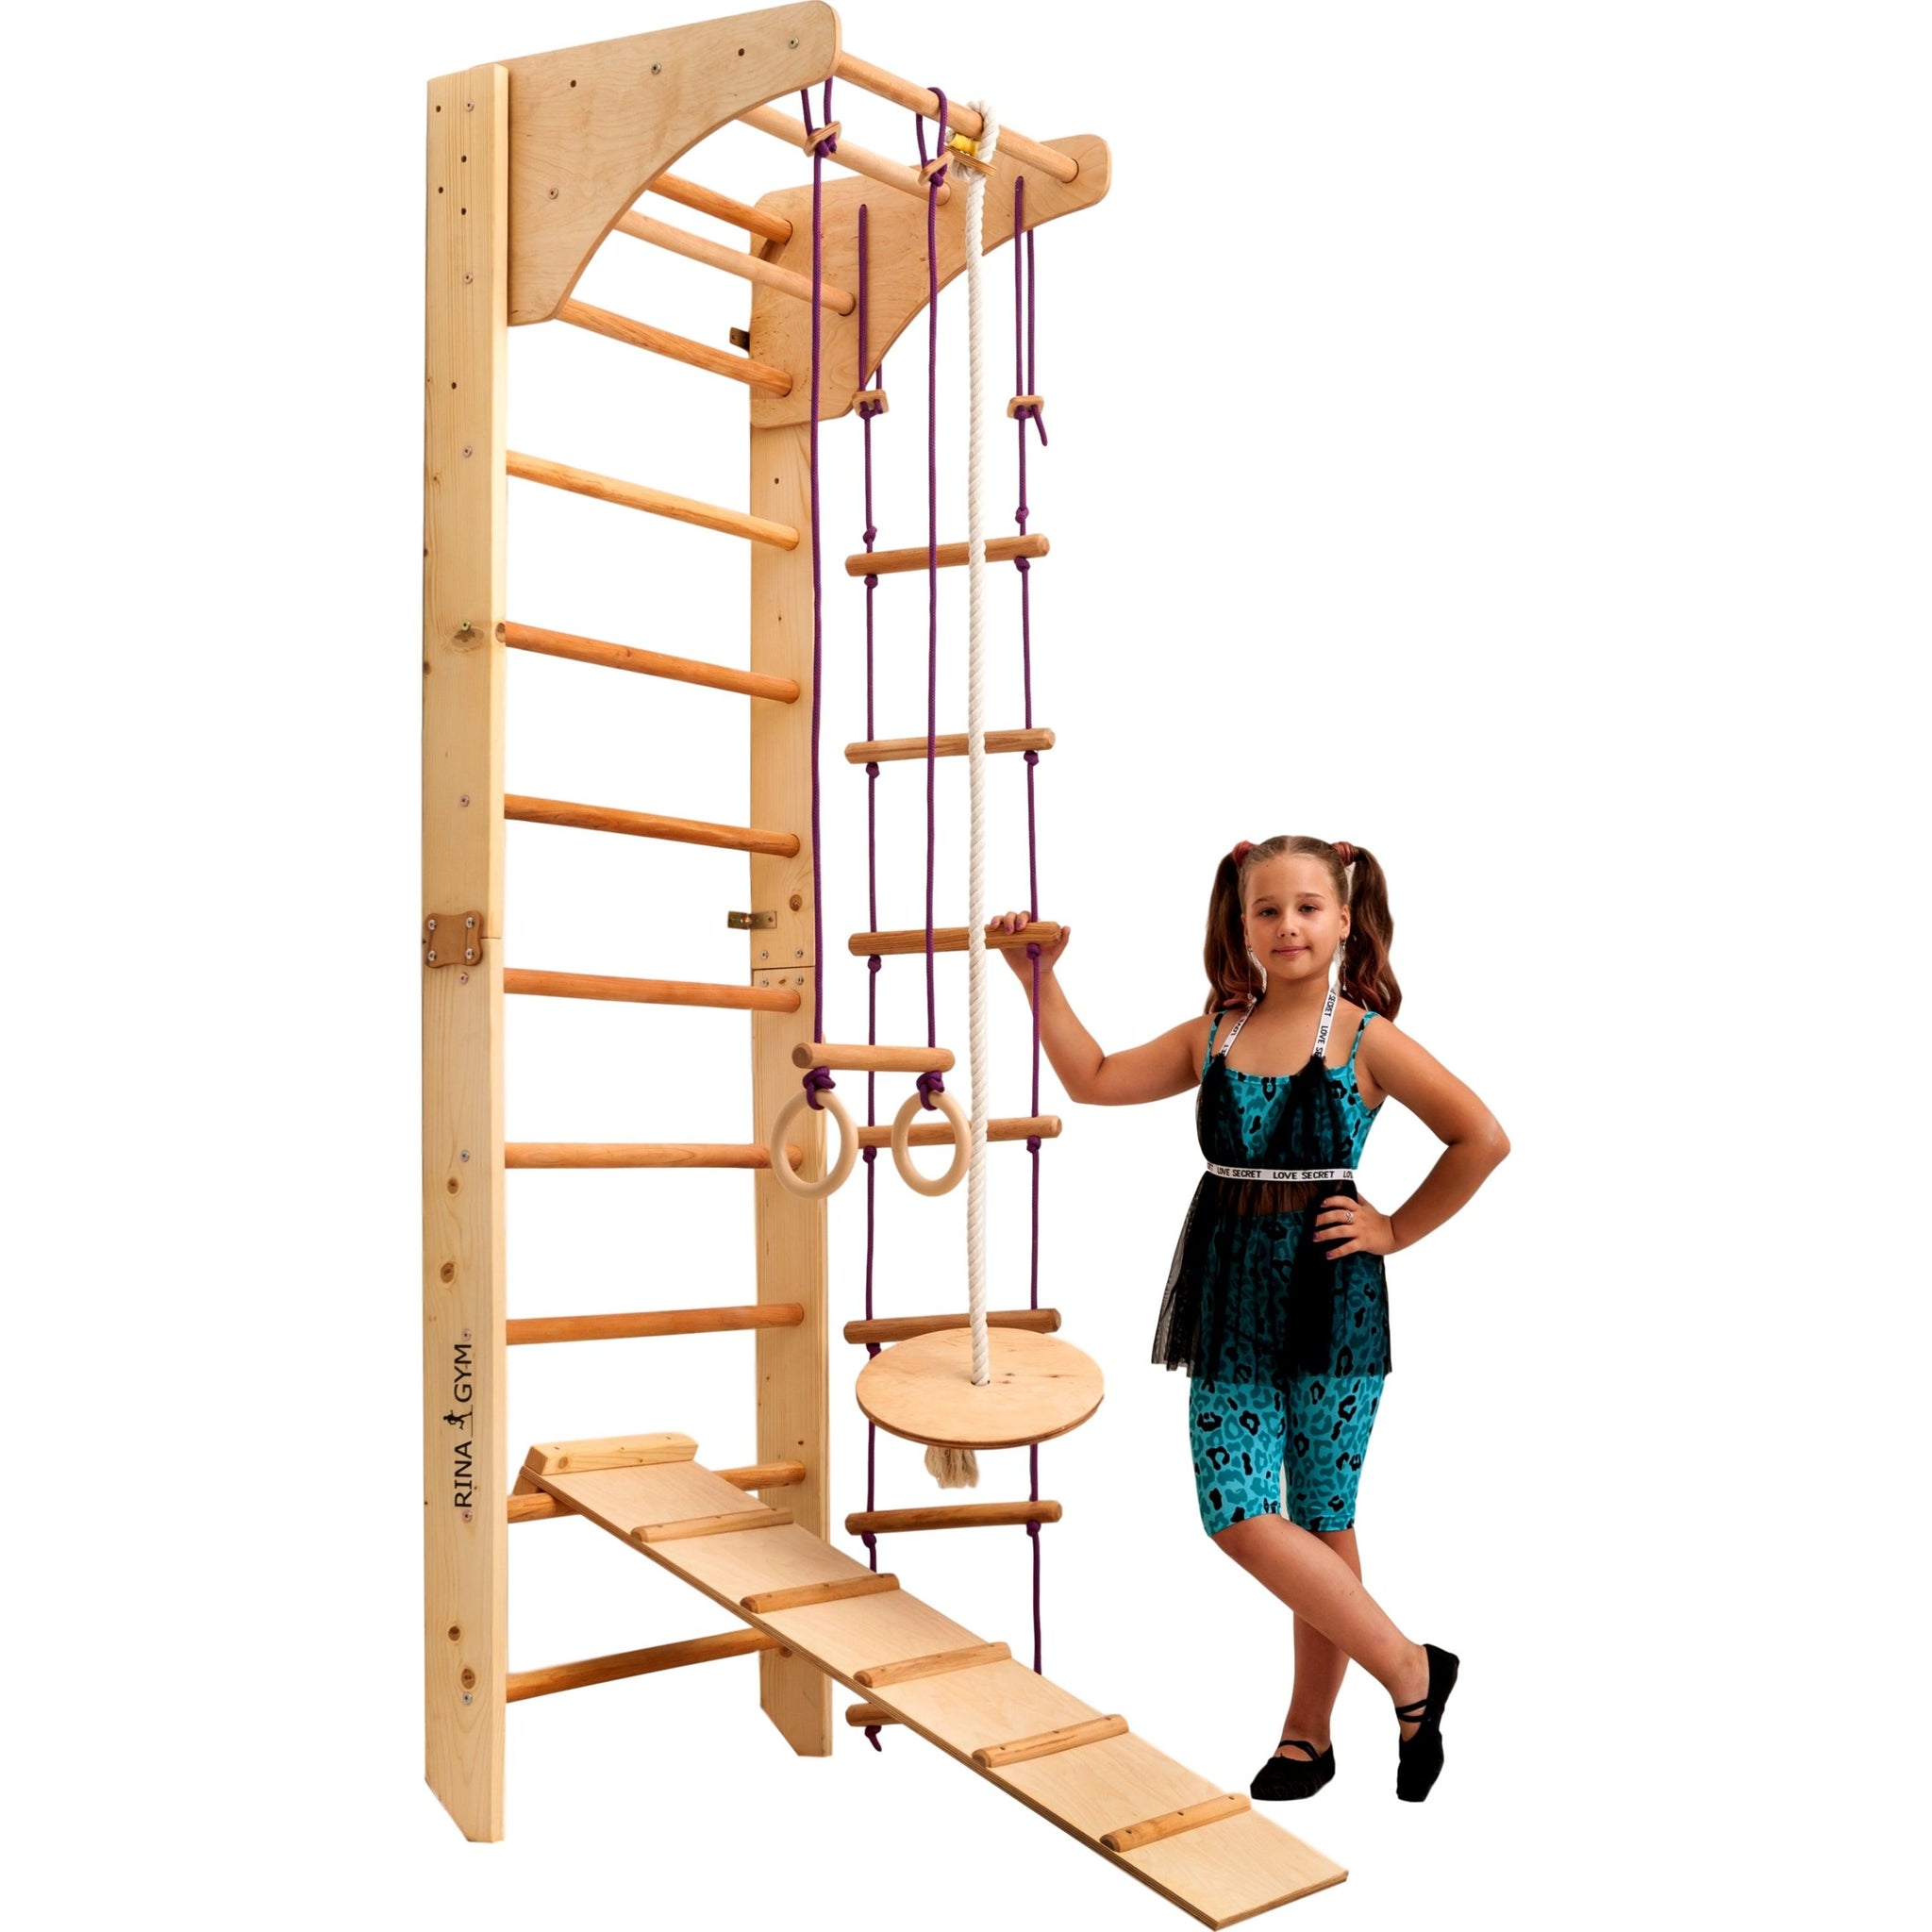 Climbing wall for children - indoor wooden climbing frame, wall bar, bar, gymnastic rings, climbing rope, removable beam, Swedish ladder, slide (Kombi 3)